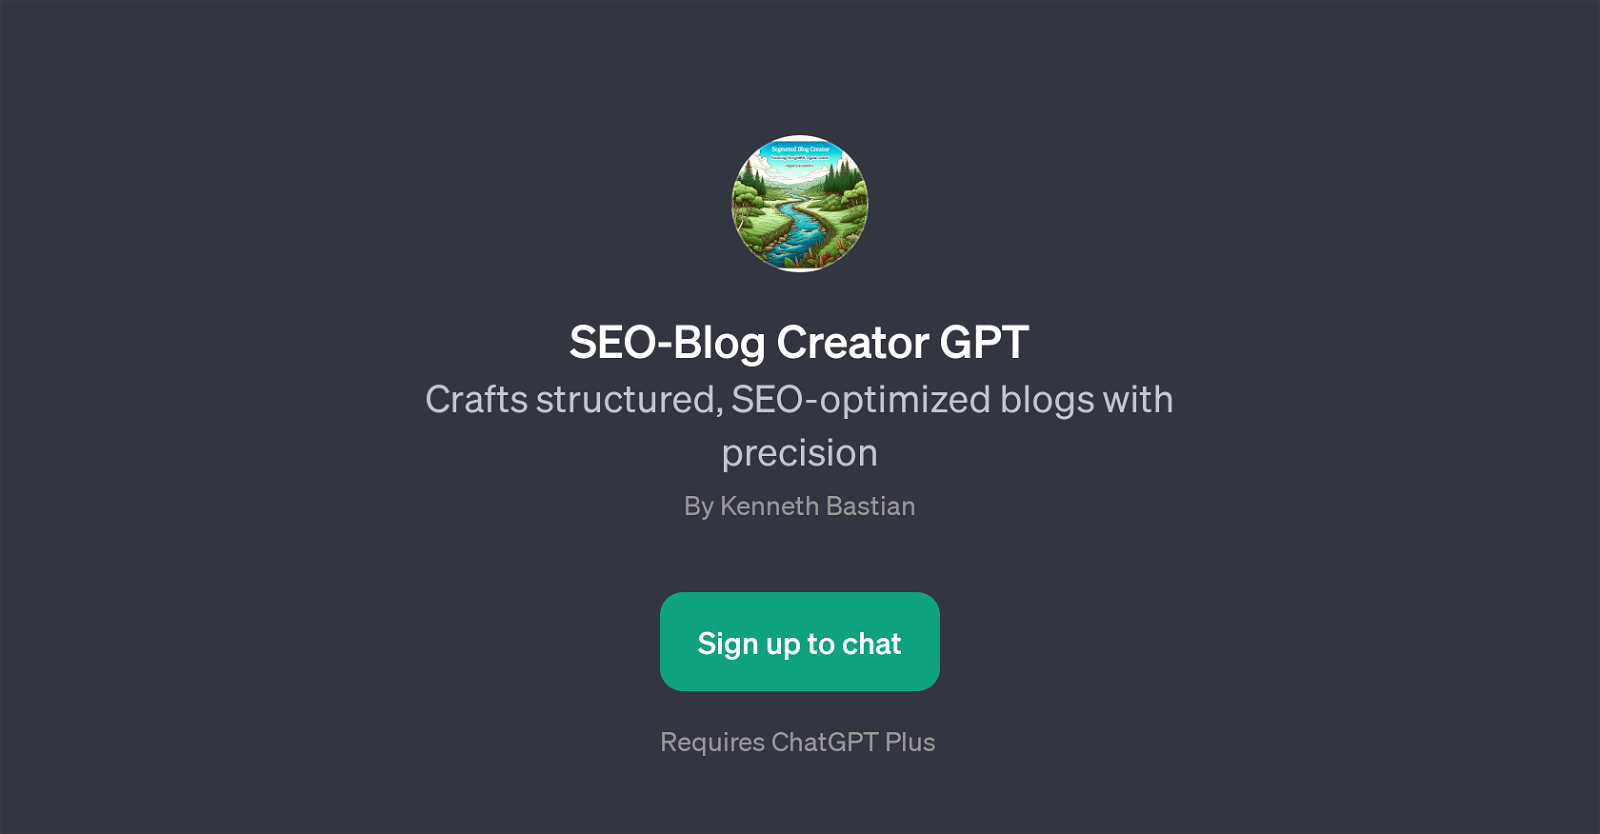 SEO-Blog Creator GPT website